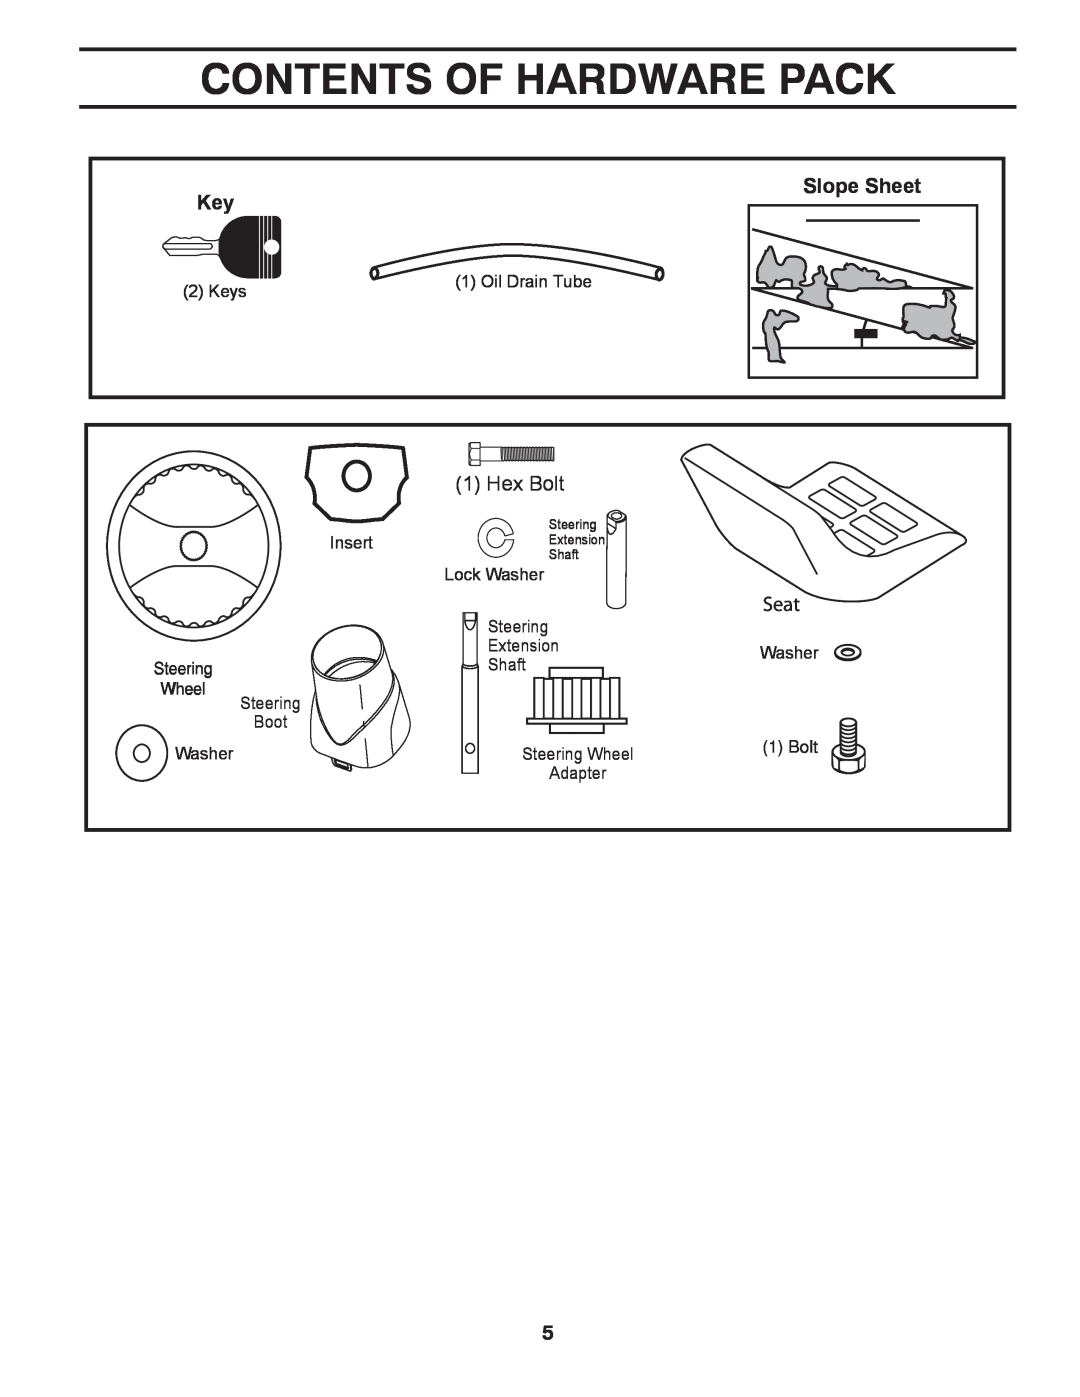 Poulan PB19542LT manual Contents Of Hardware Pack, Slope Sheet, Hex Bolt, Seat 